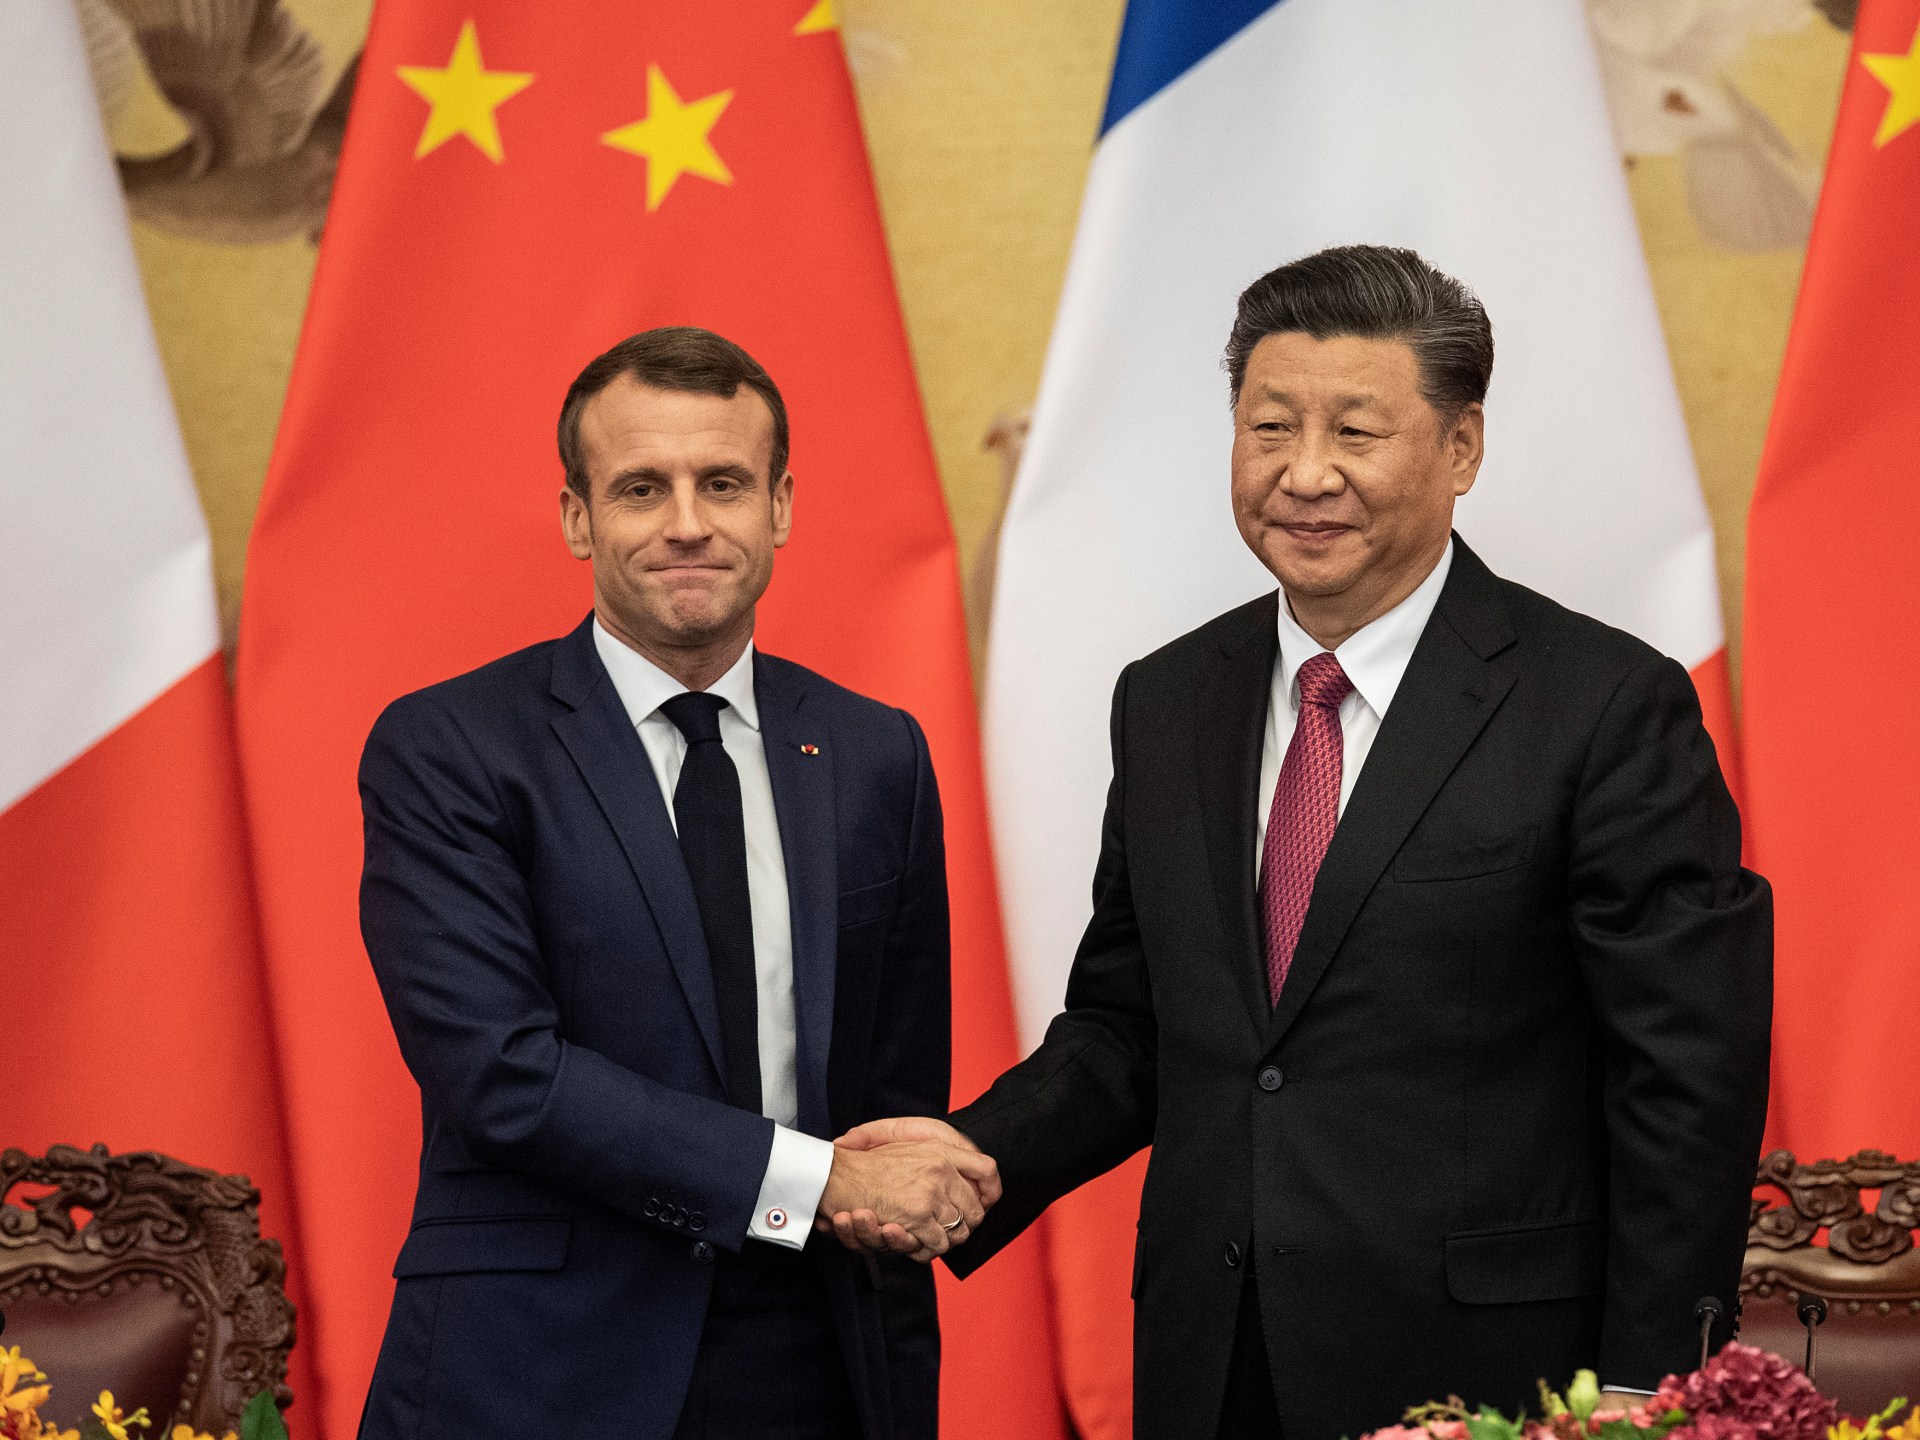 Macron untuk mengunjungi China, meminta bantuan Xi untuk mengakhiri perang Rusia-Ukraina |  Berita Uni Eropa